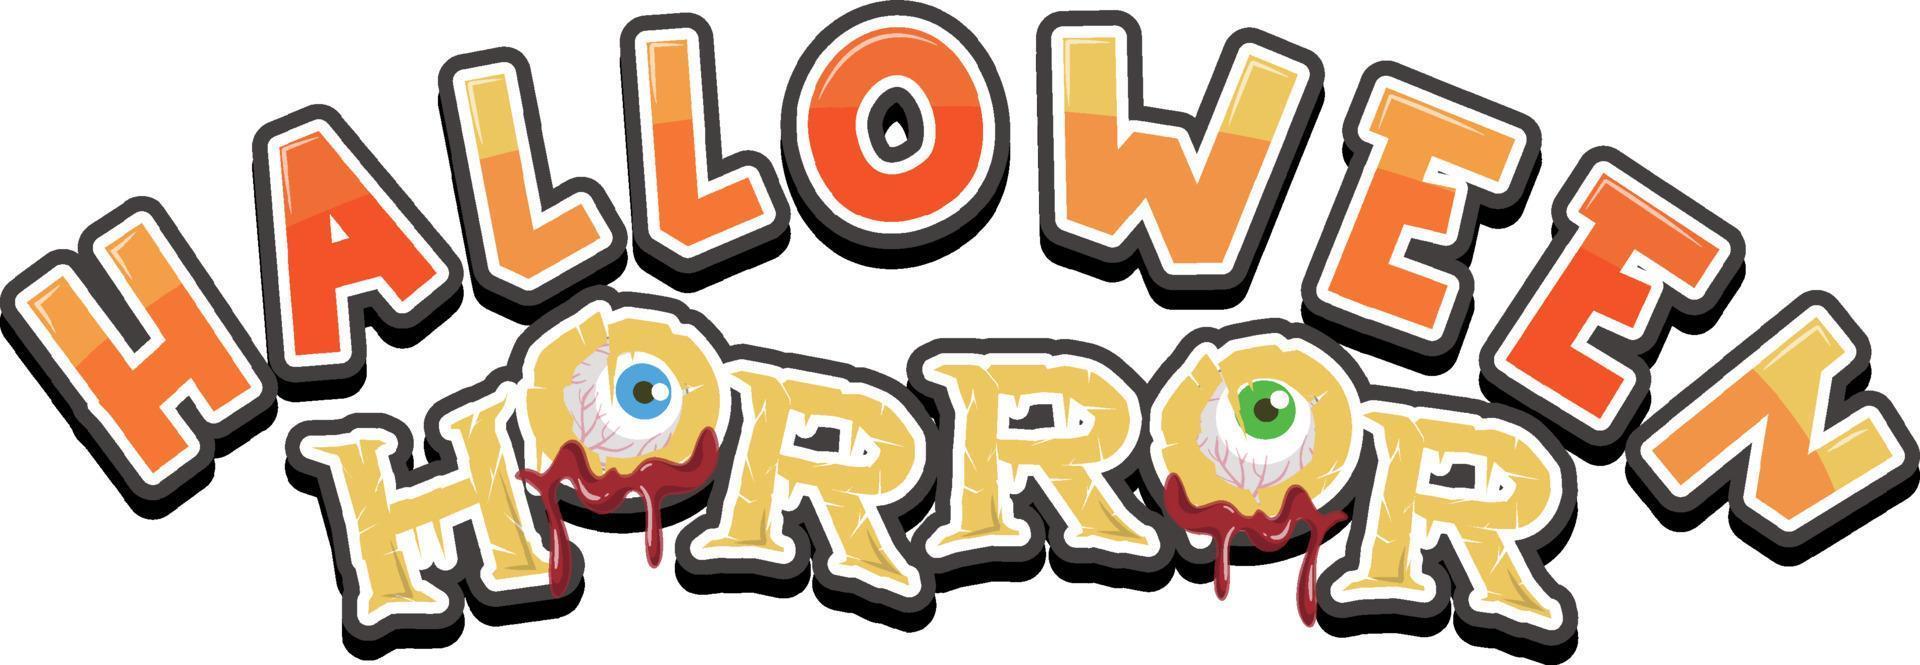 halloween horror woord logo vector